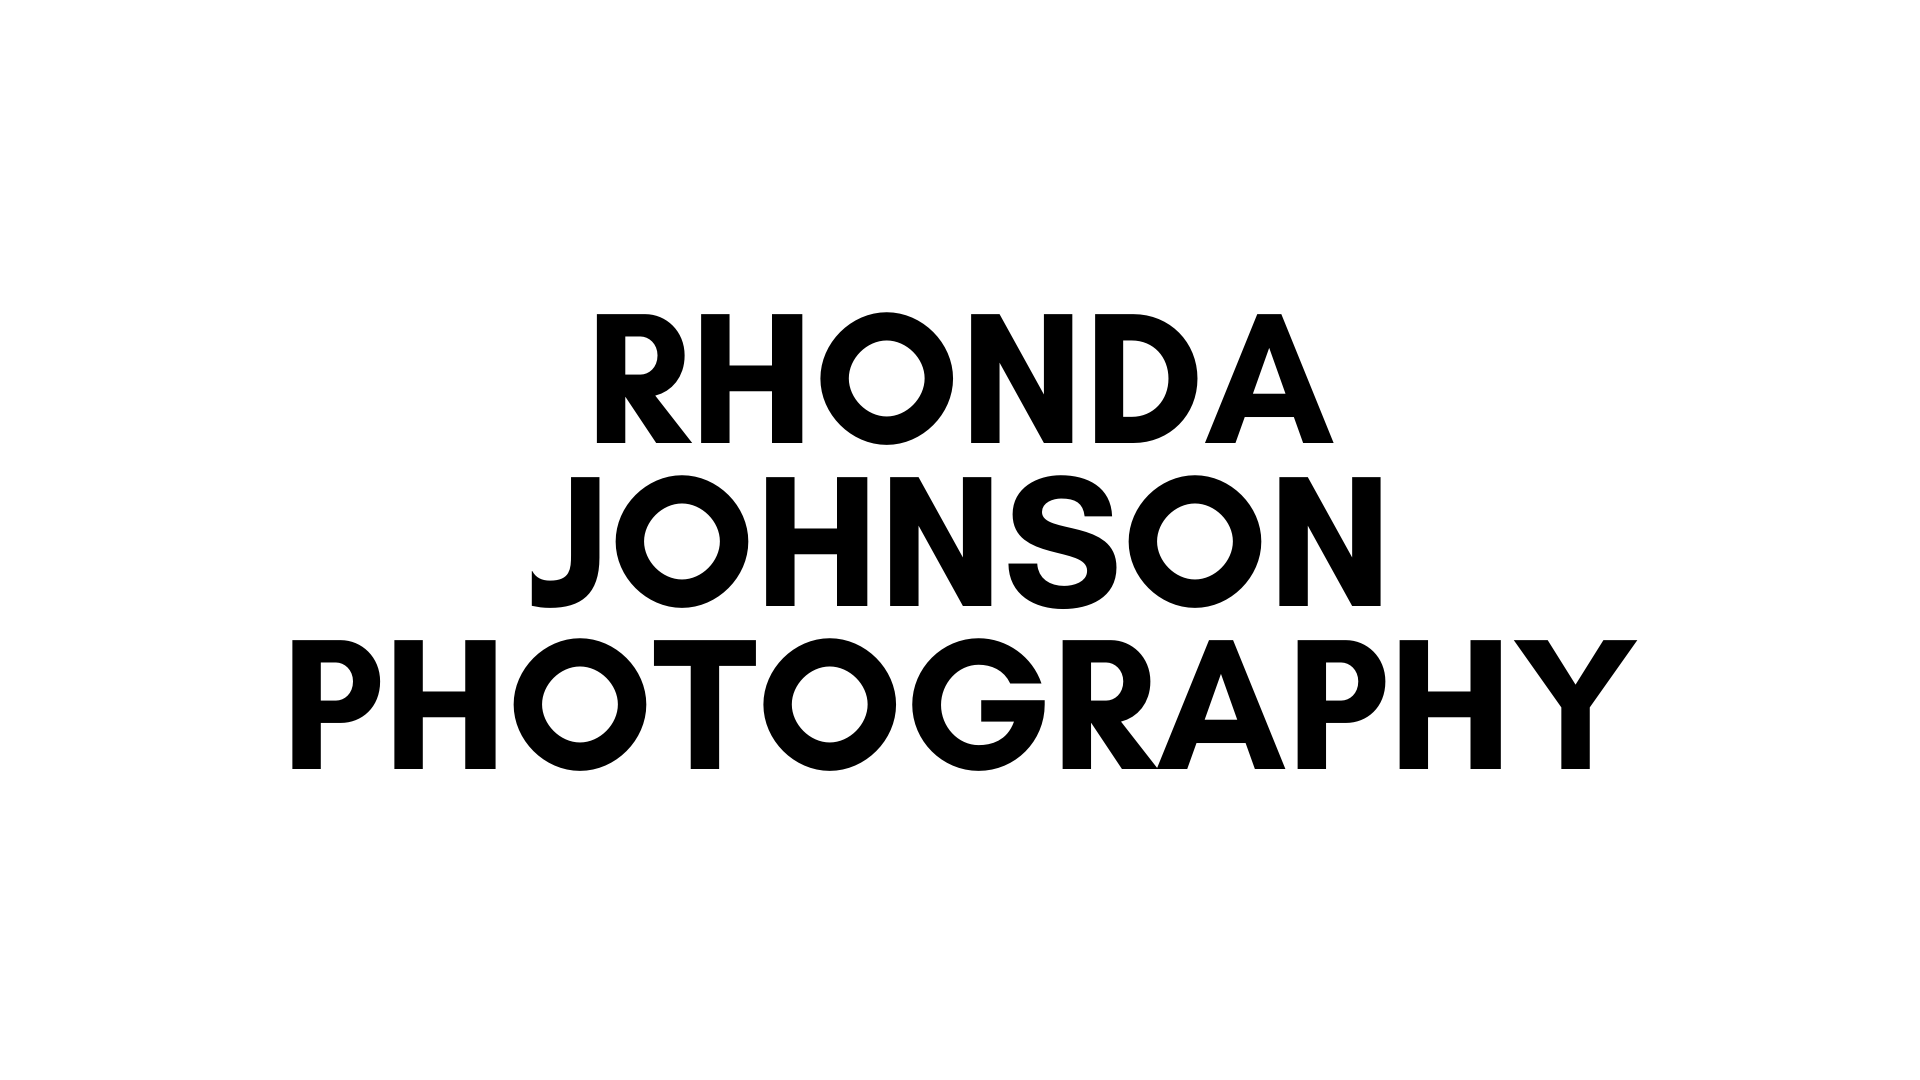 RHONDA JOHNSON PHOTOGRAPHY